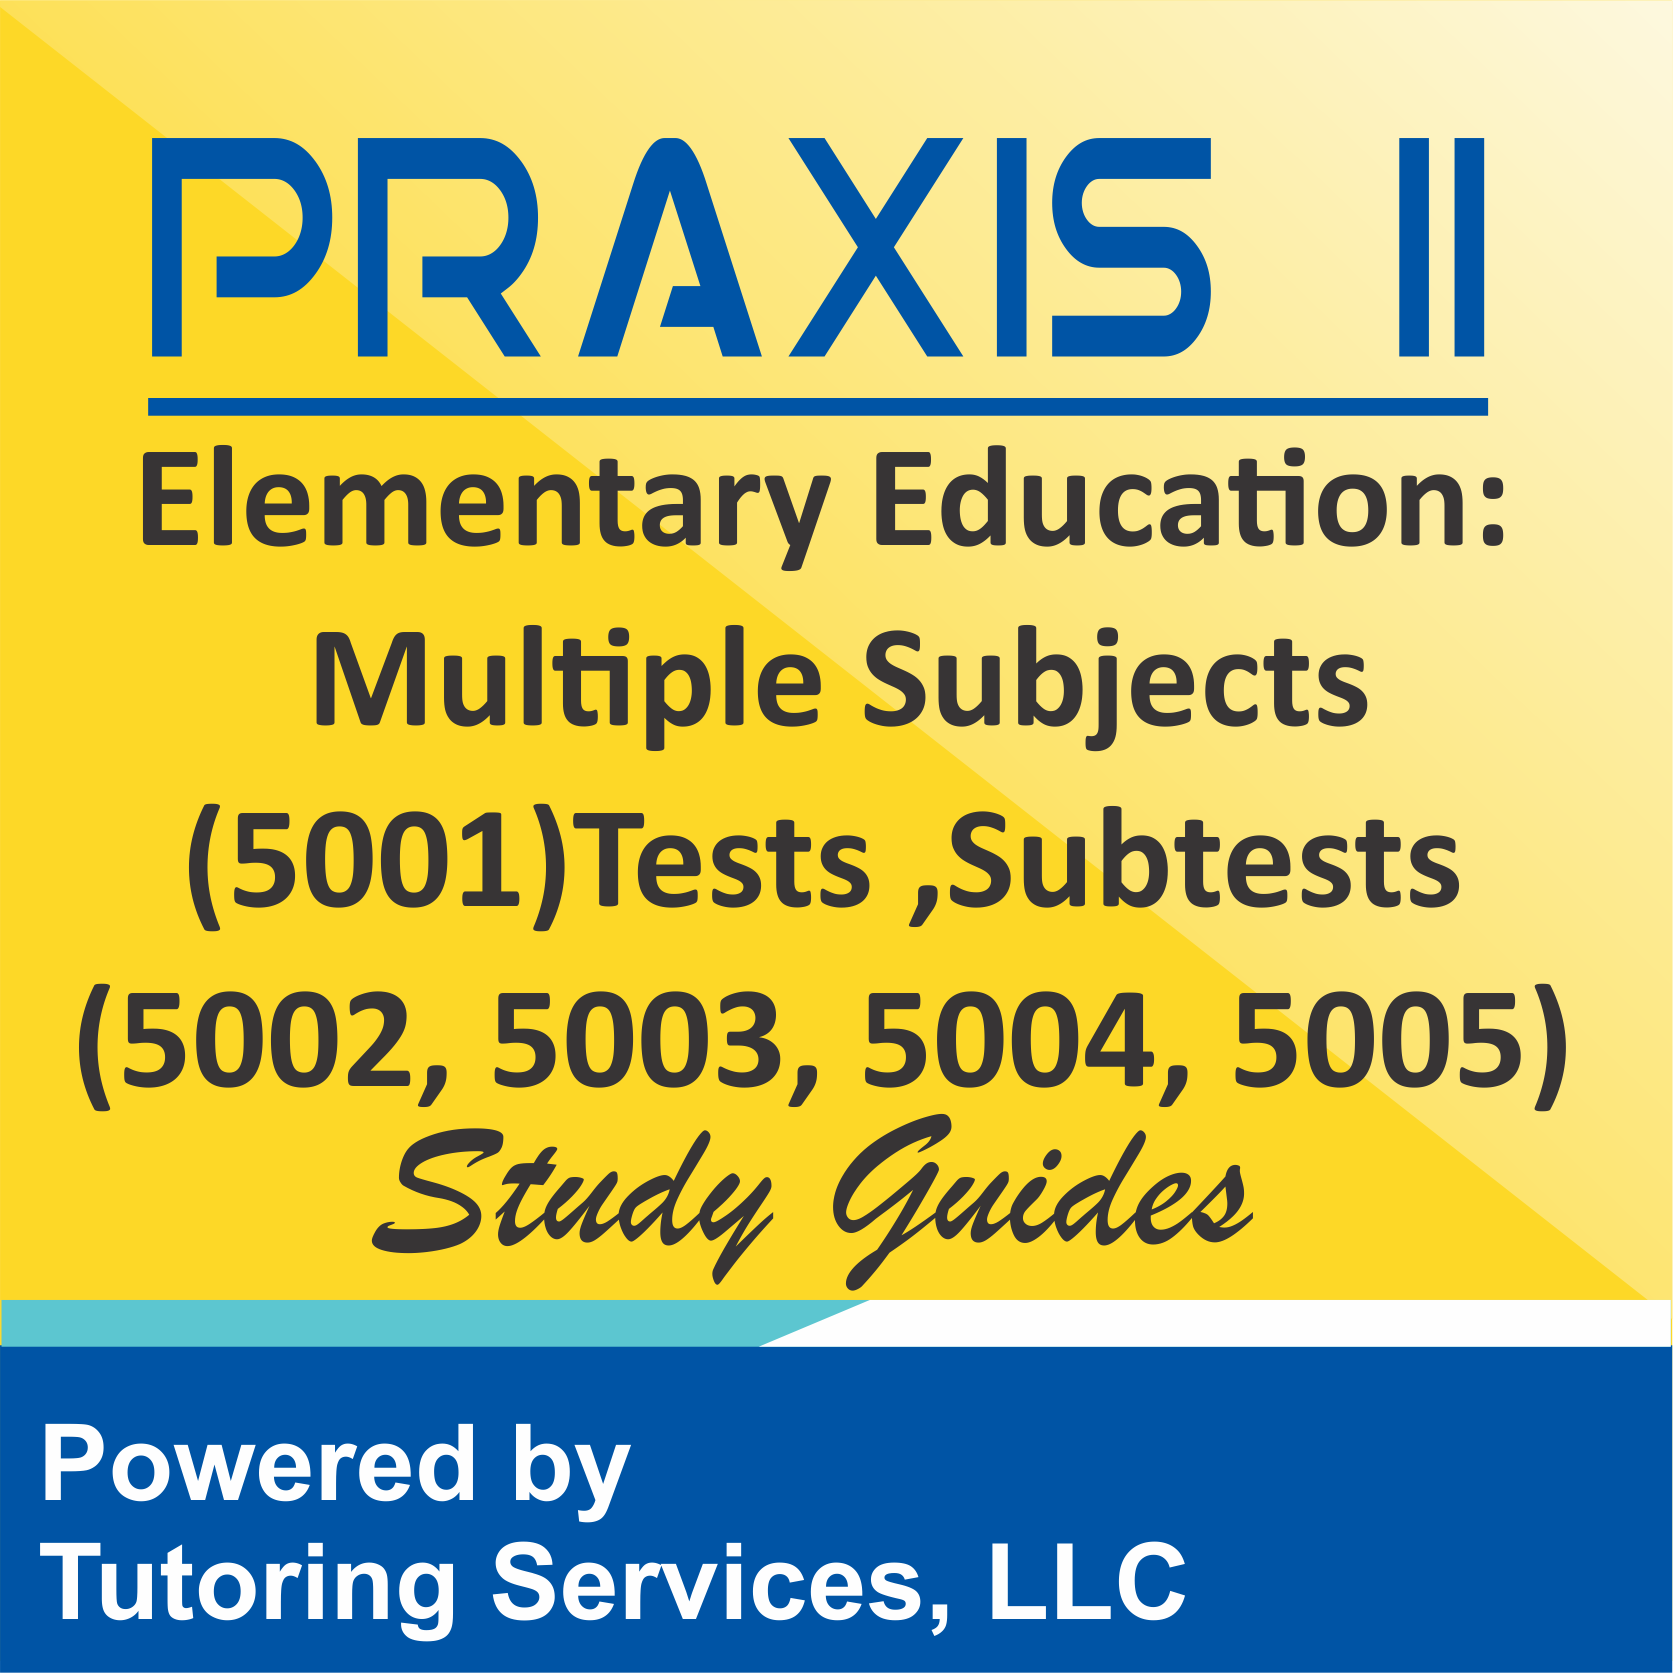 Praxis II Elementary Education: Multiple Subjects (5001) Examination Syllabus